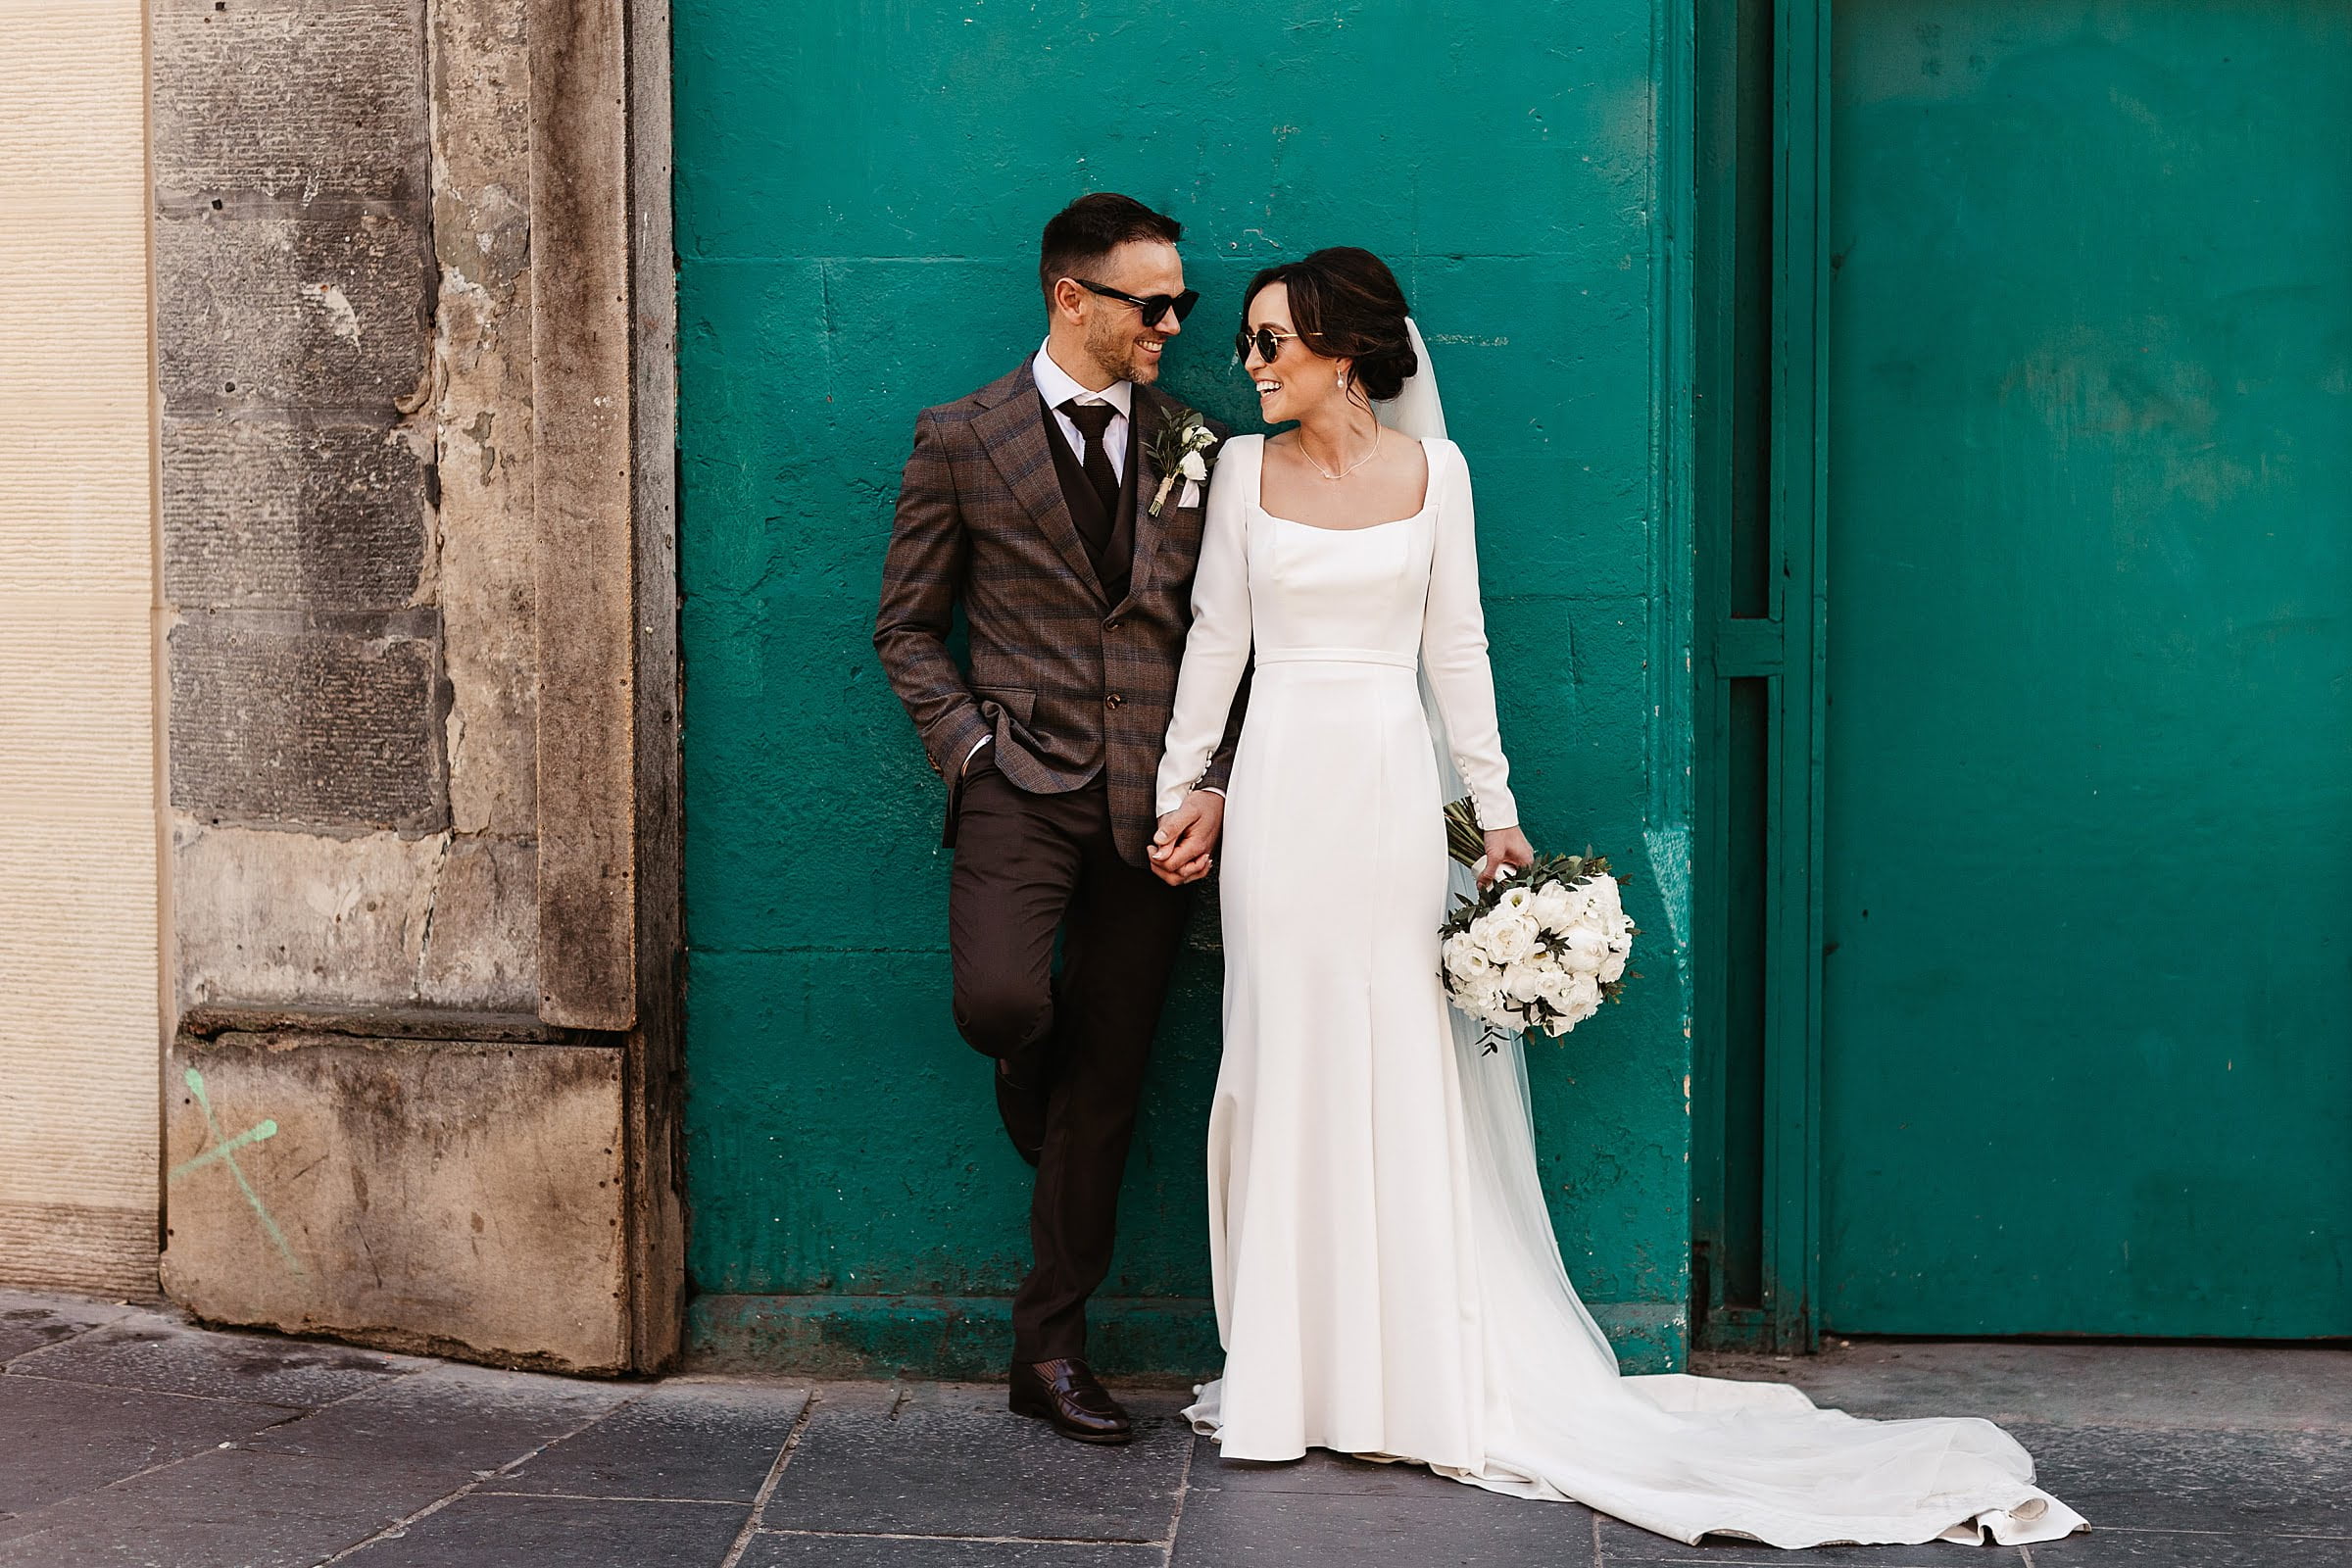 edinburgh city centre wedding photos bride and groom portraits allure bridals dress